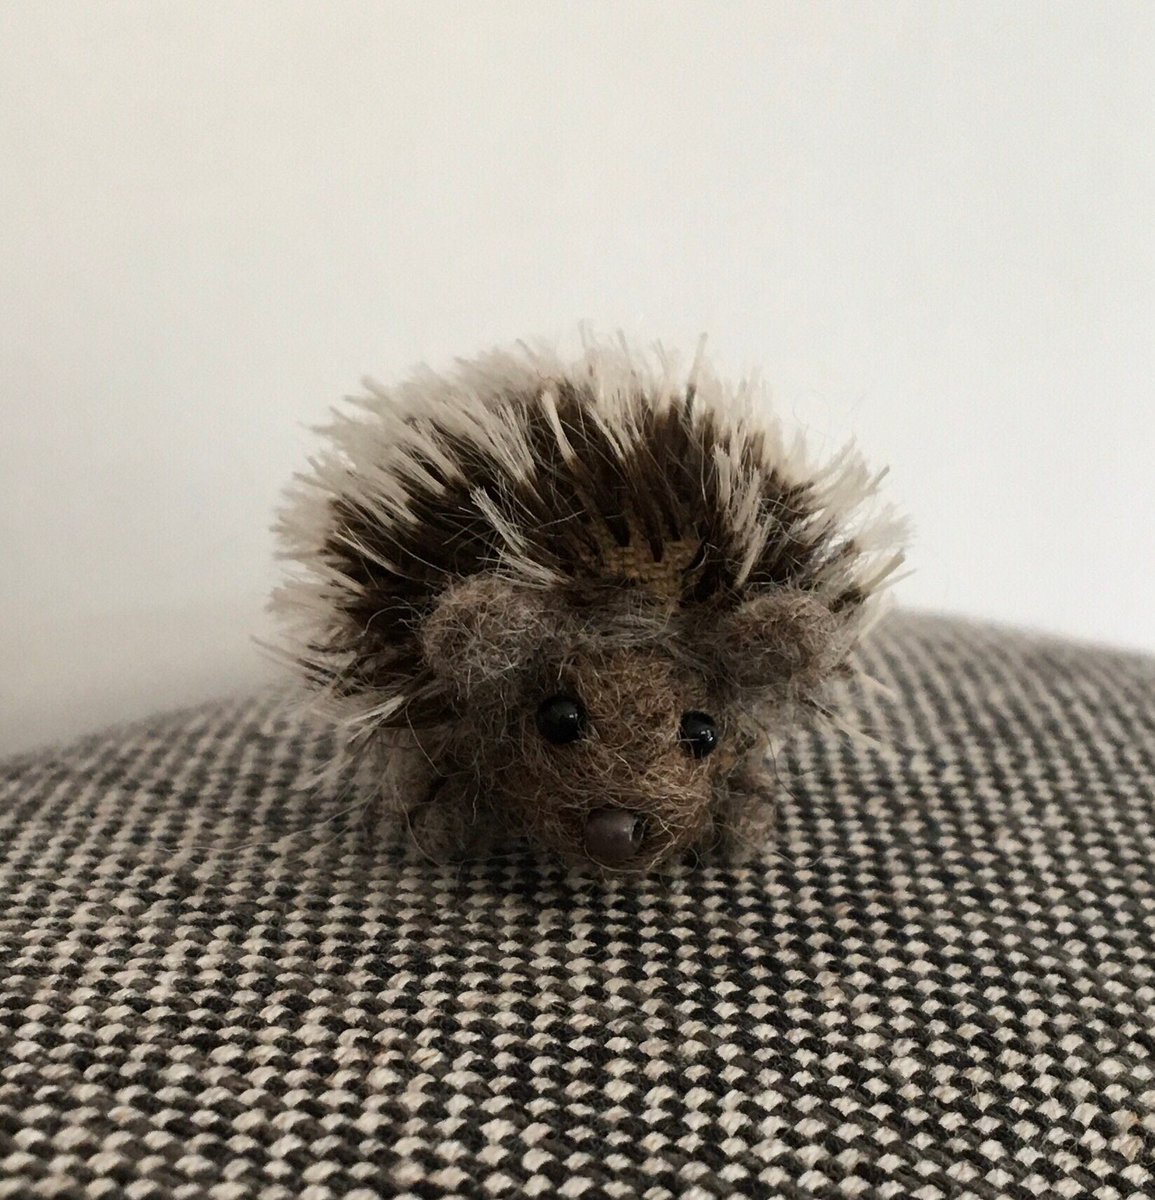 Excited to share this Needle felted miniature hedgehog. #feltedhedgehog #dollshouseanimal #tinyhedgehog #miniaturehedgehog #supercutehedgehog etsy.me/3uwboXV